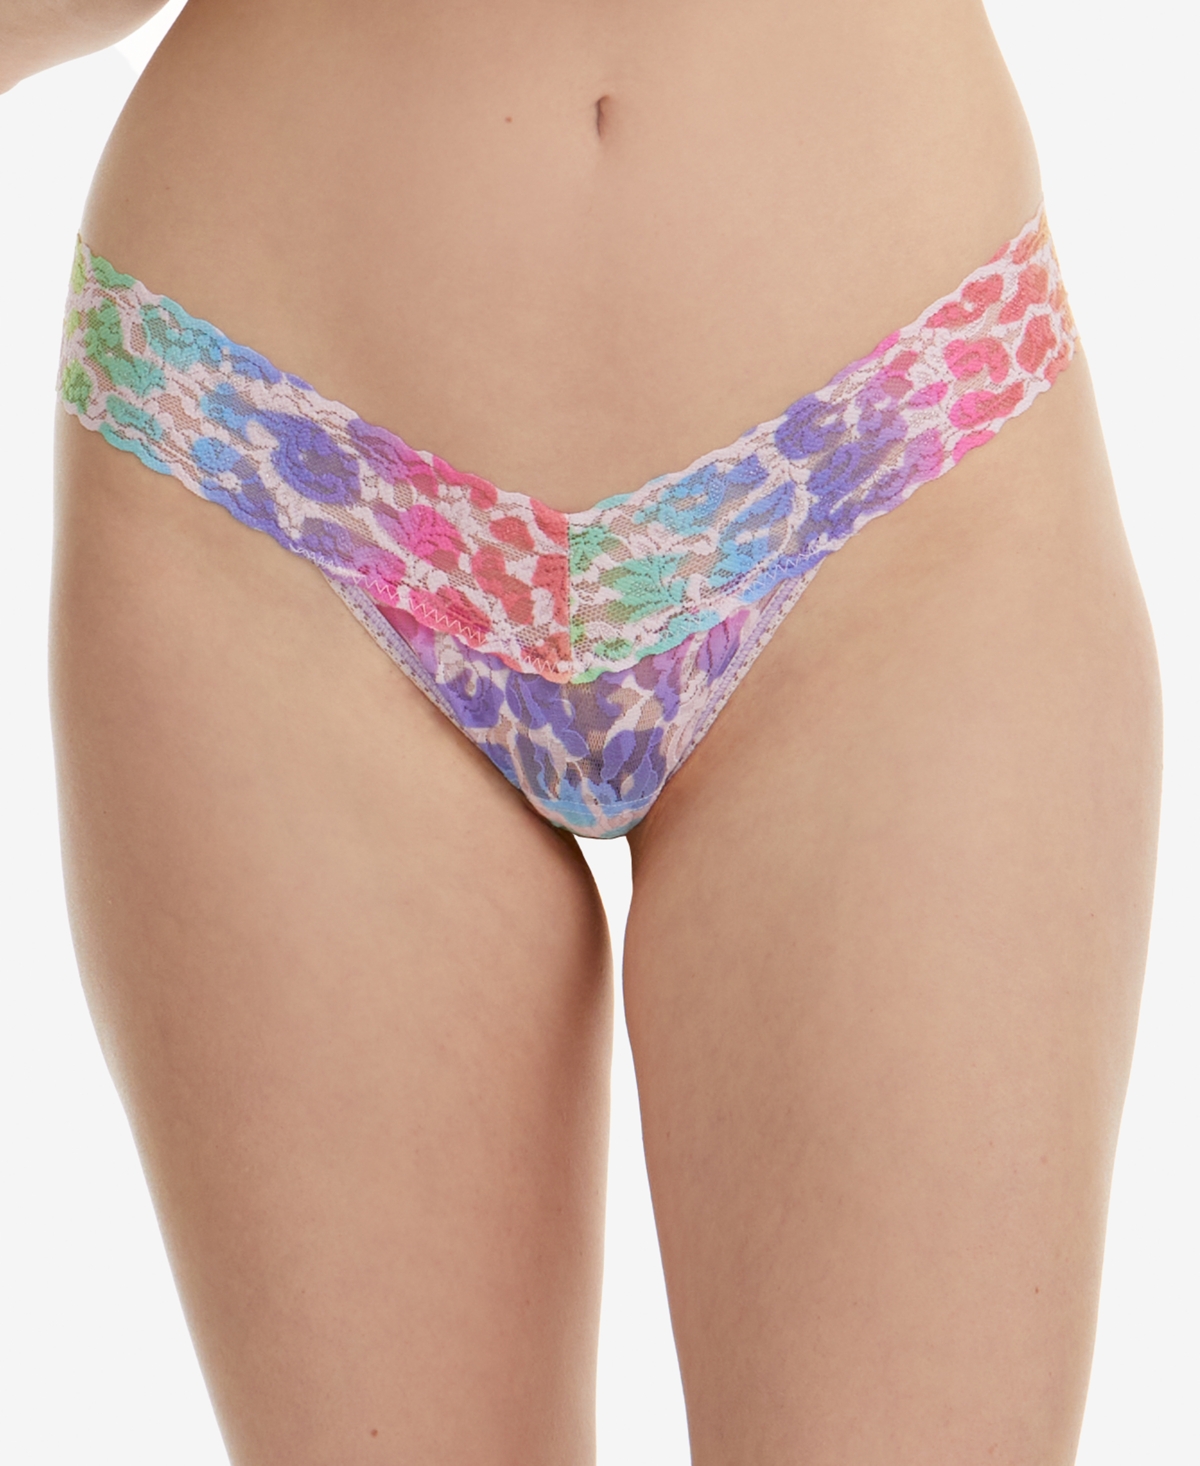 Women's One Size Printed Low Rise Thong Underwear PR4911905 - Pride Leopard